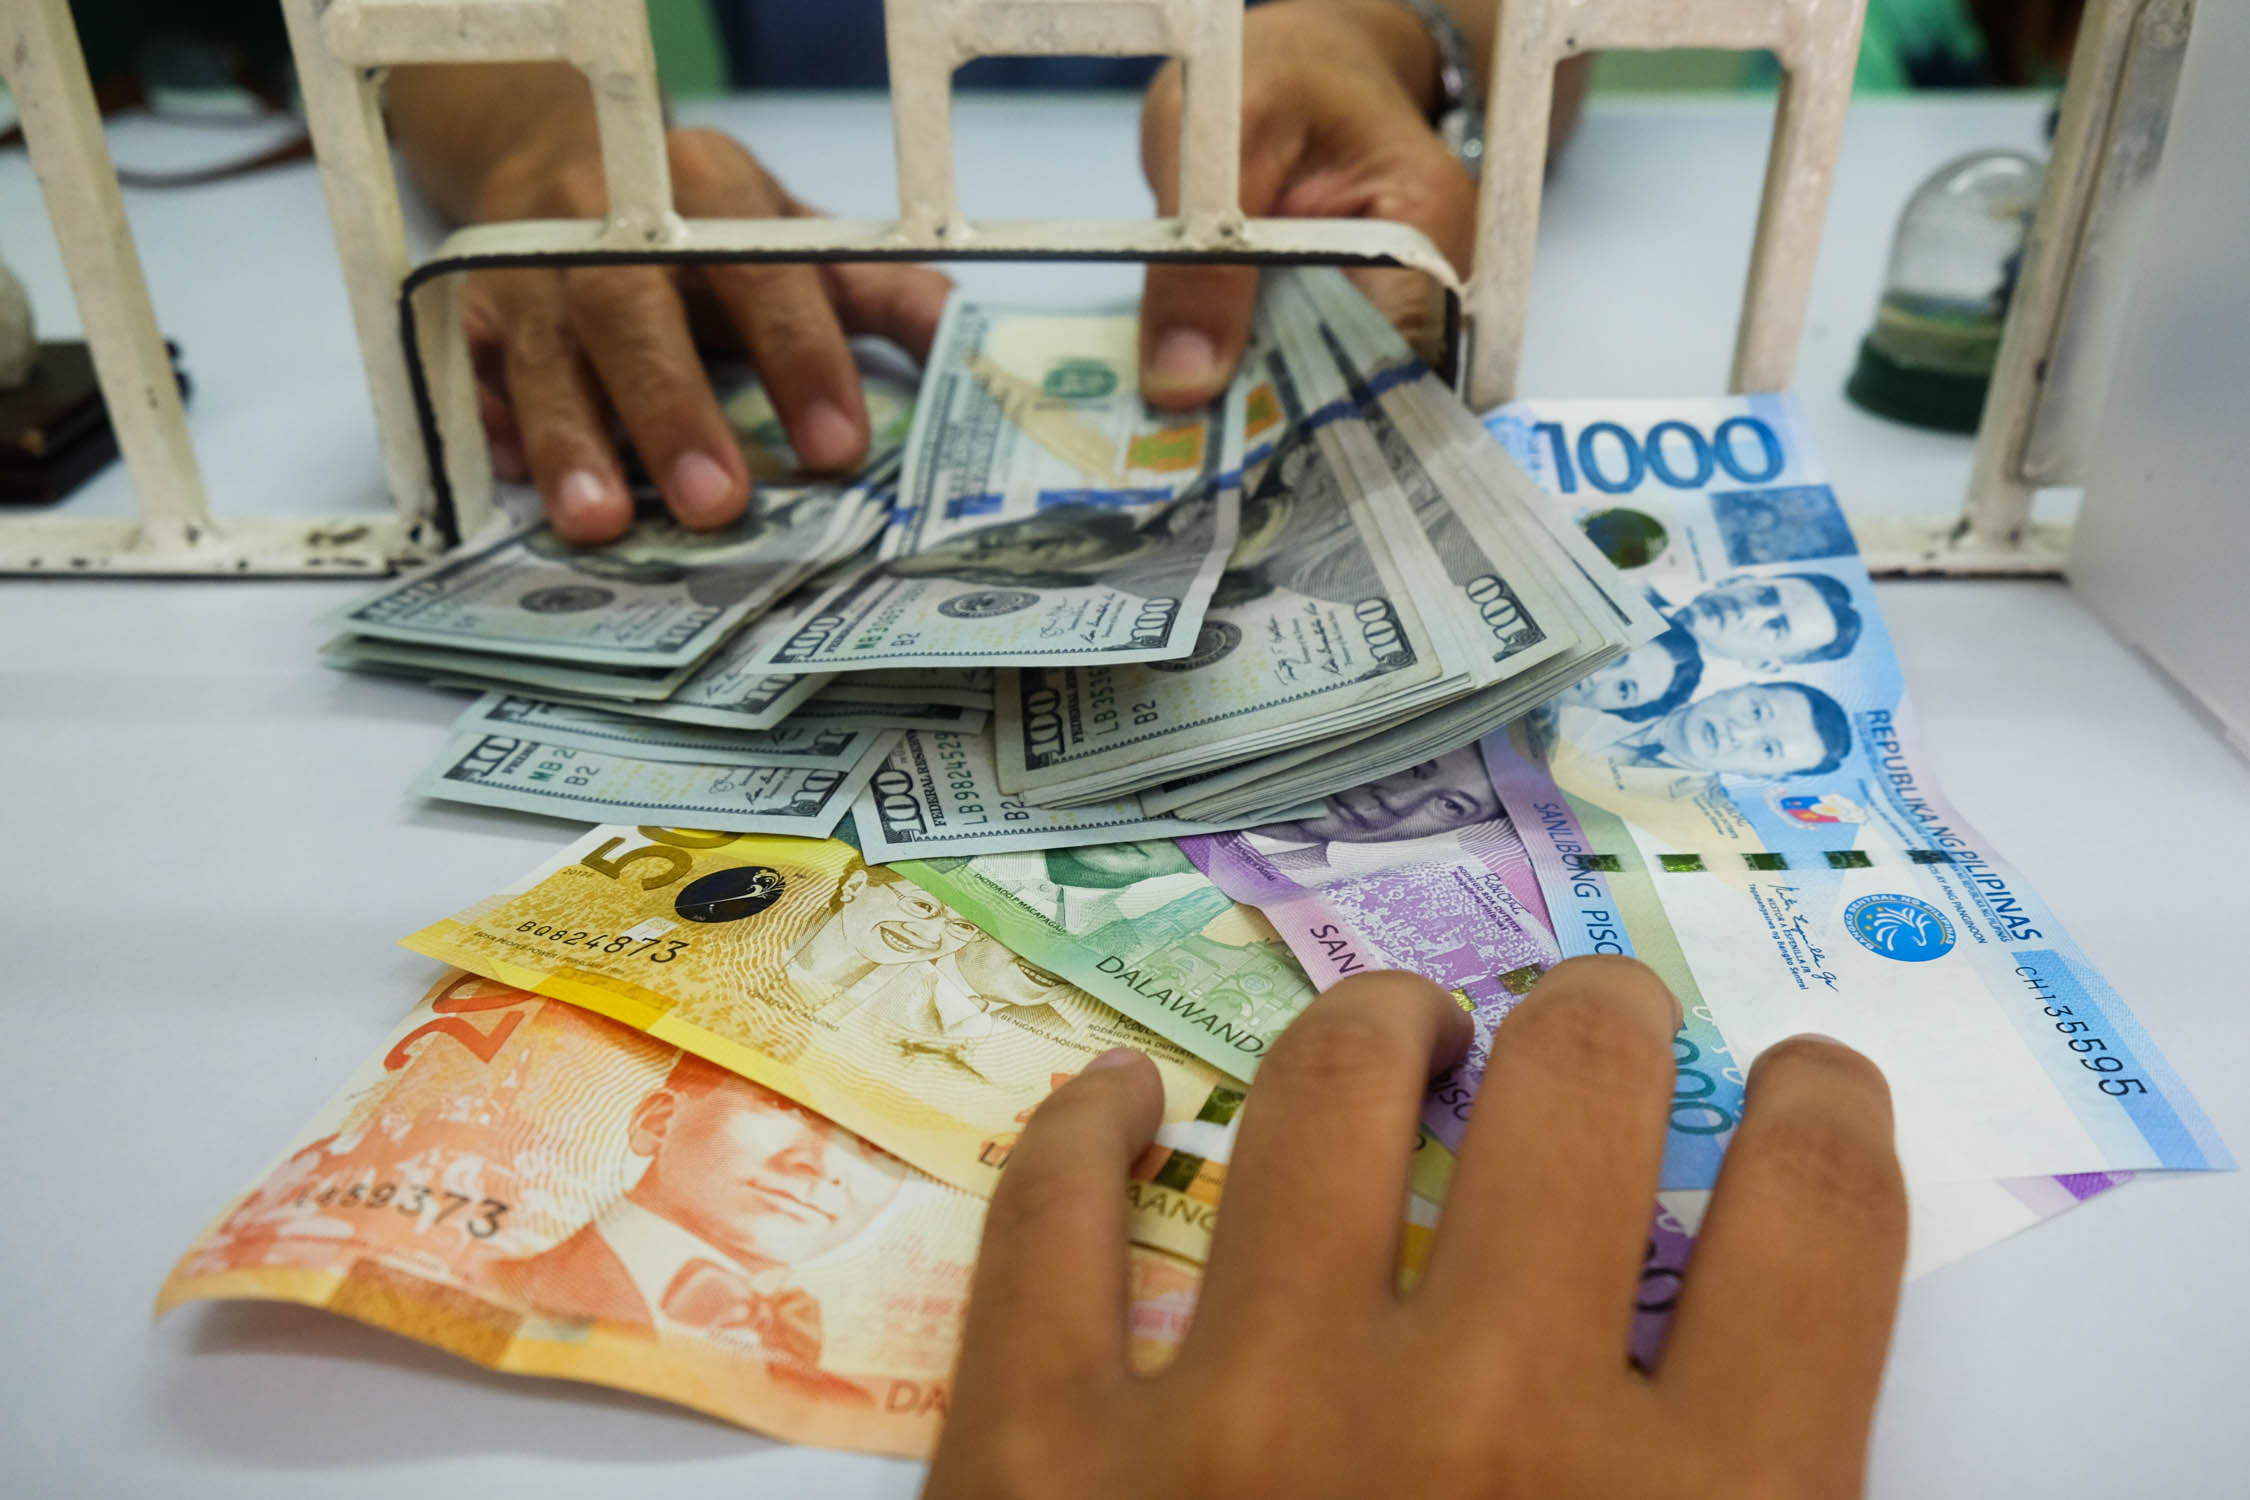 USD PHP  US Dollar Philippine Peso 